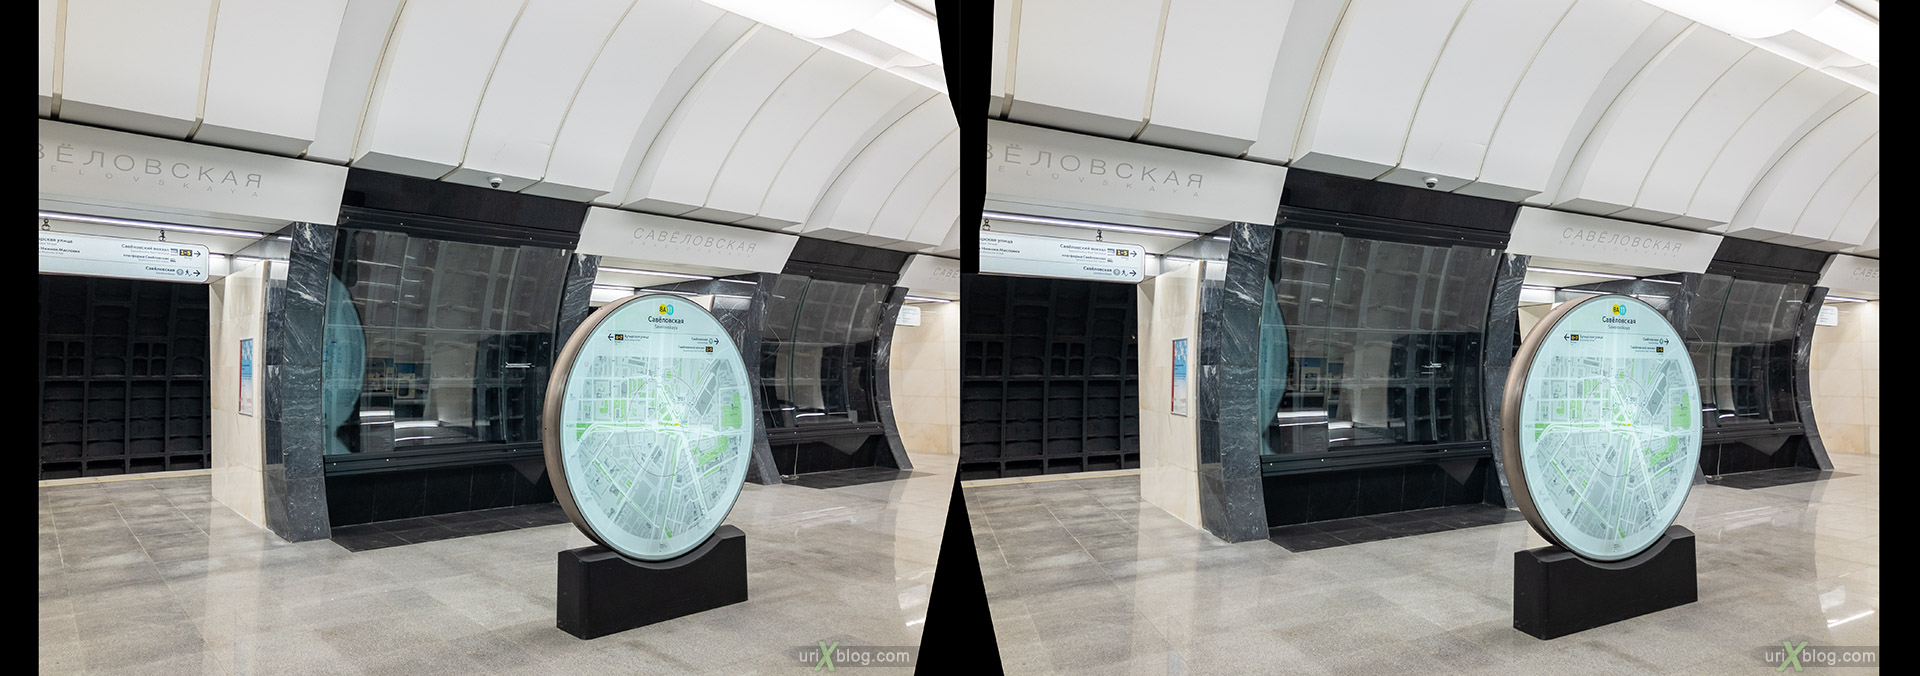 Savyolovskaya BKL, metro station, Bolshaya Koltsevaya line, Moscow, Russia, 3D, stereo pair, cross-eyed, crossview, cross view stereo pair, stereoscopic